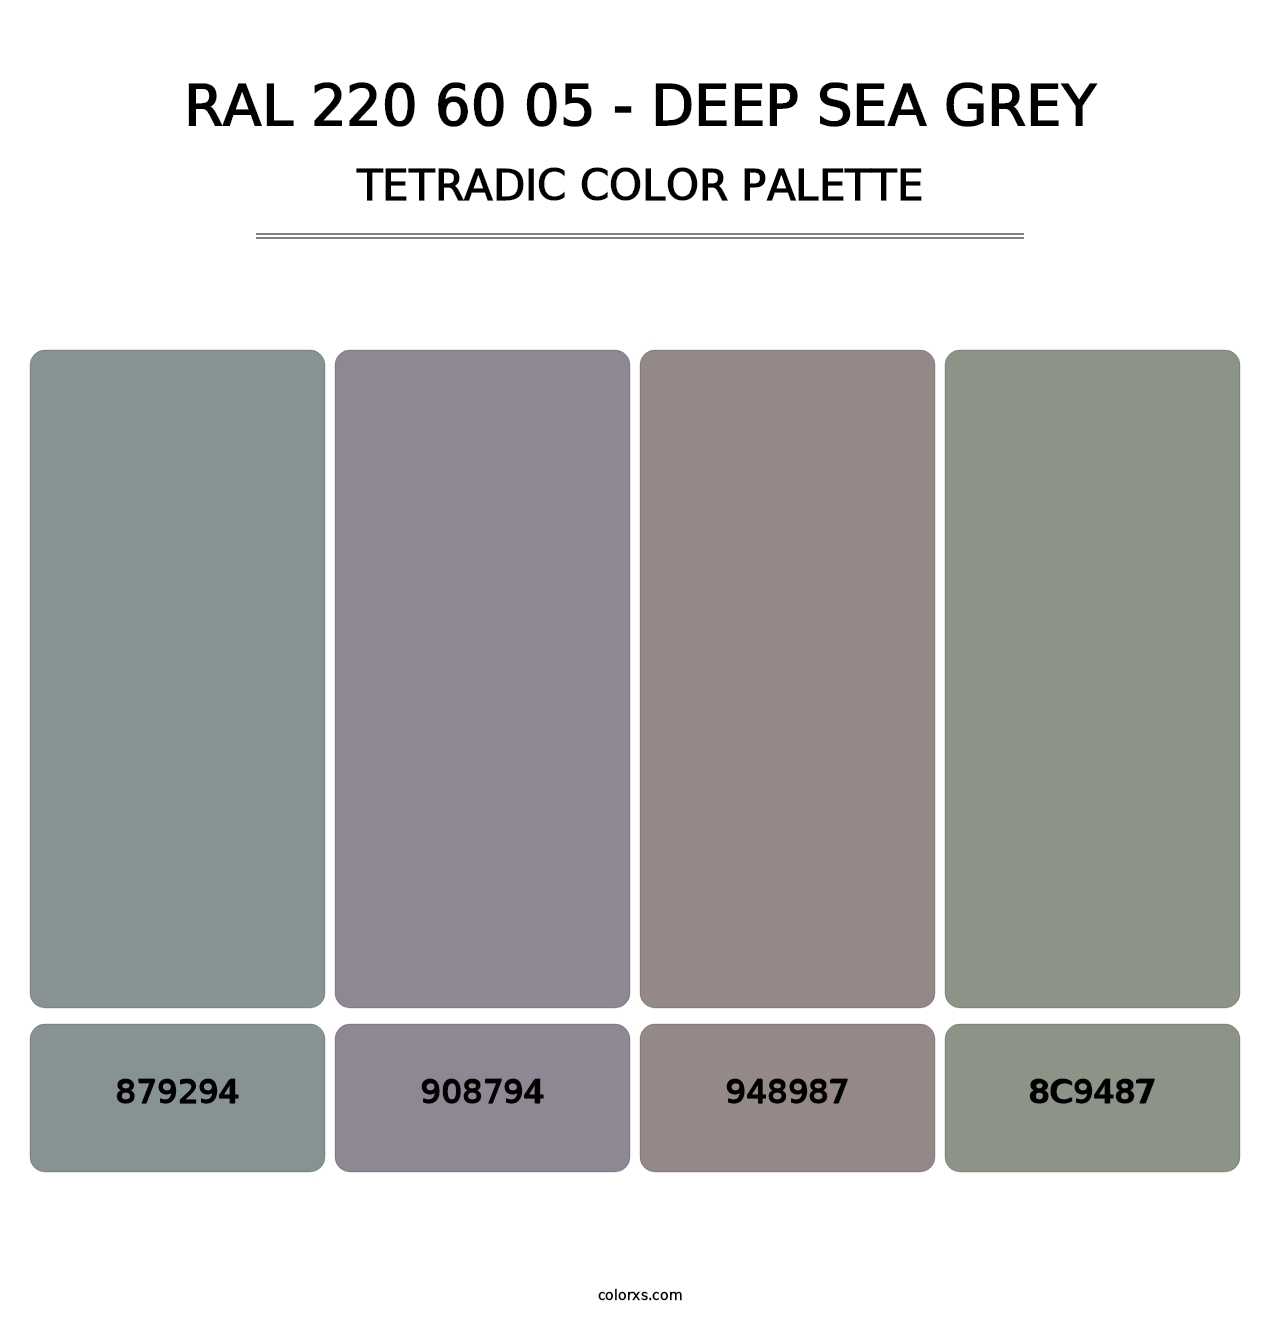 RAL 220 60 05 - Deep Sea Grey - Tetradic Color Palette